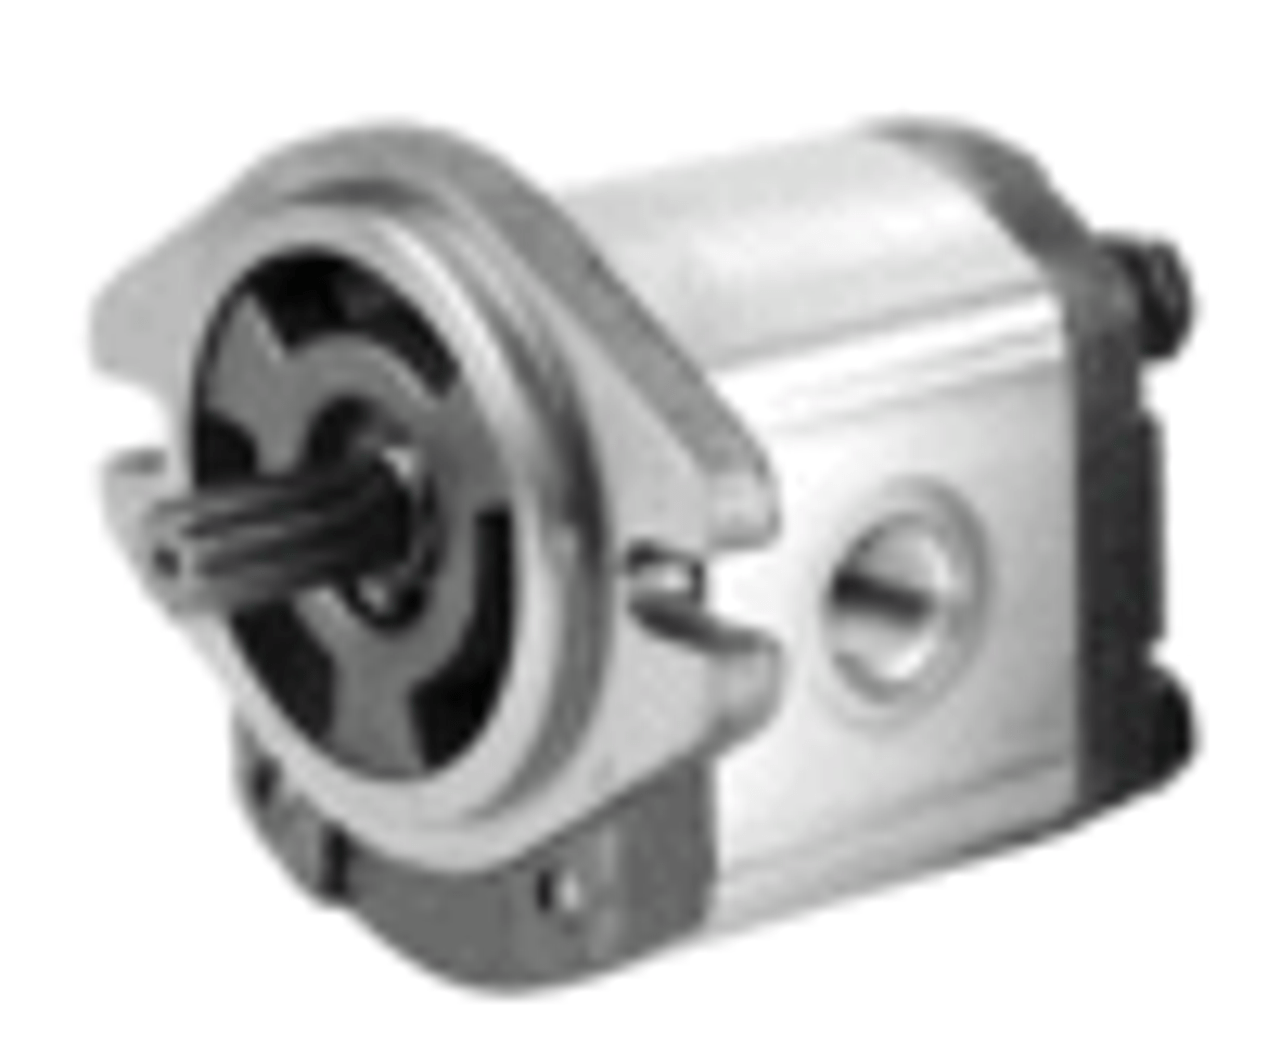 Honor Pumps 2GG2U26R Hydraulic gear pump 1.53 cubic inch displacement 9T splined shaft